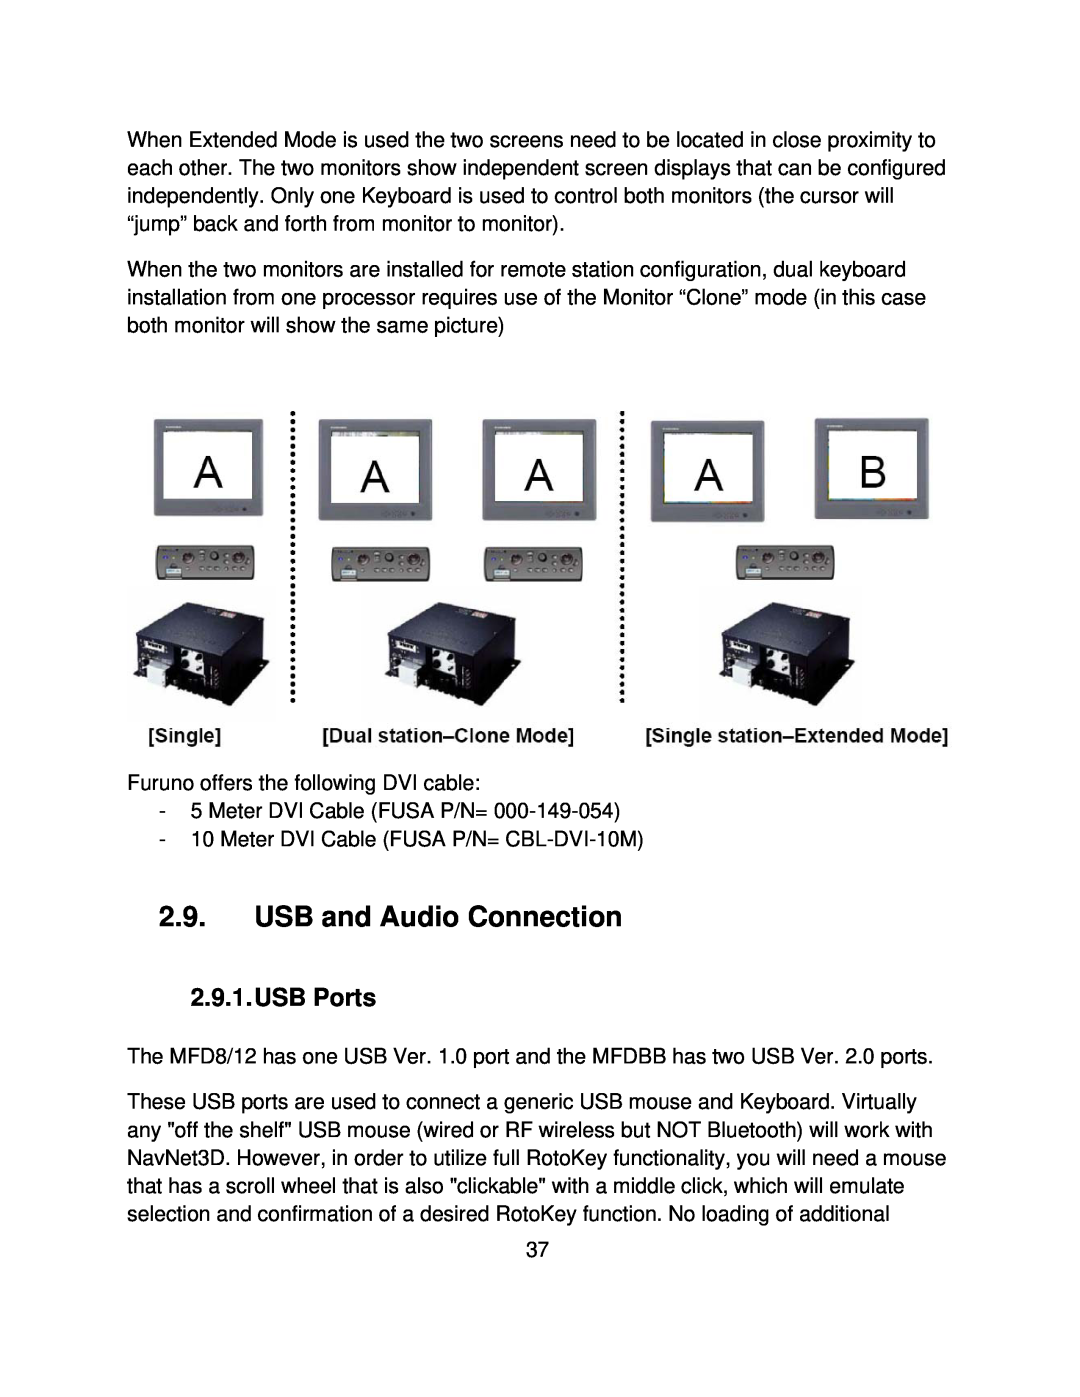 Furuno MFD8/12/BB manual USB and Audio Connection, USB Ports 